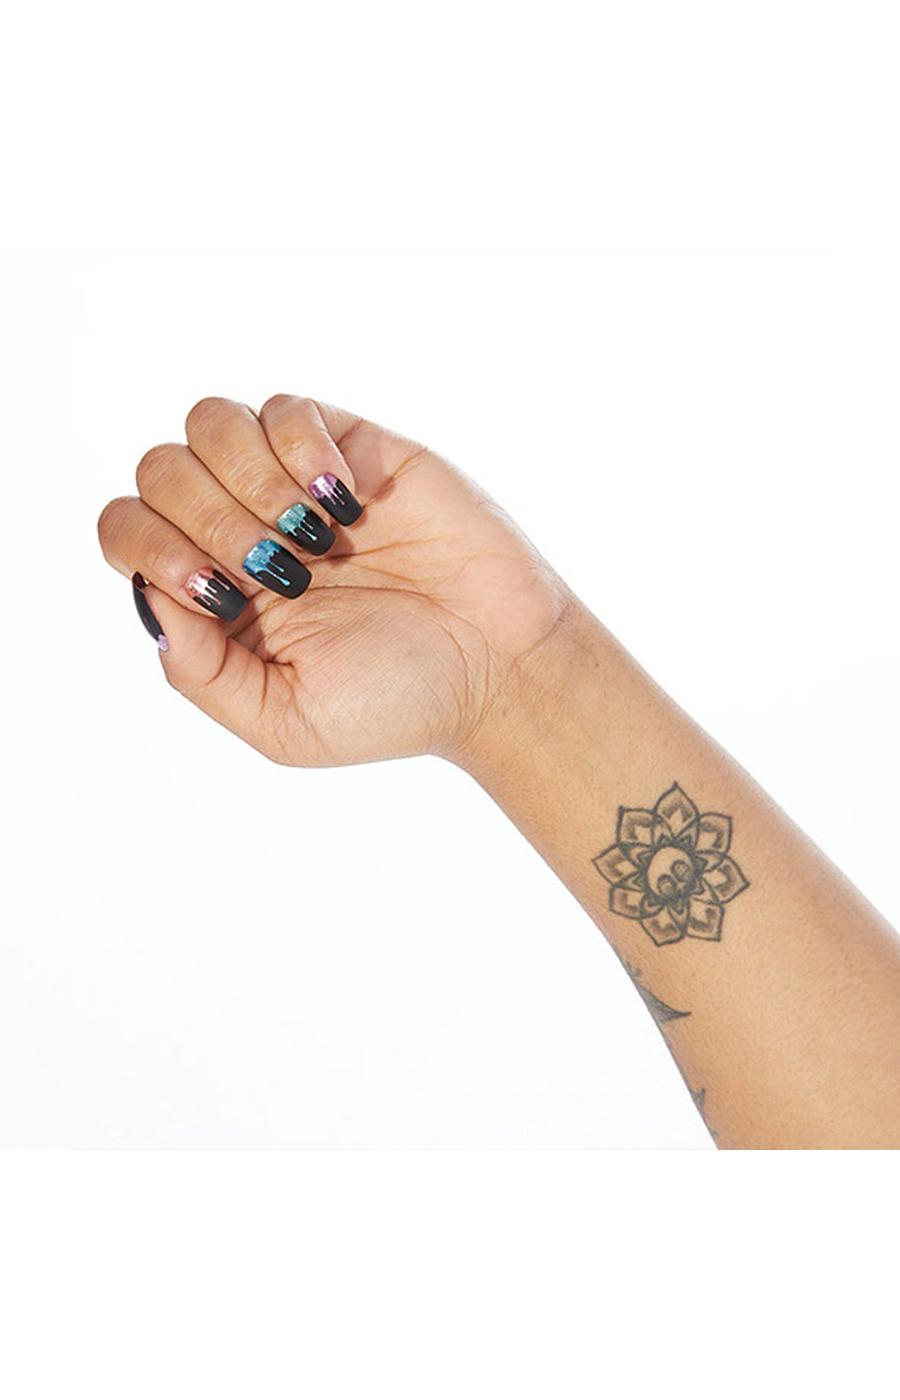 Diosa Cerriden's Spell Artificial Nails - Glitter Matte Black; image 2 of 3